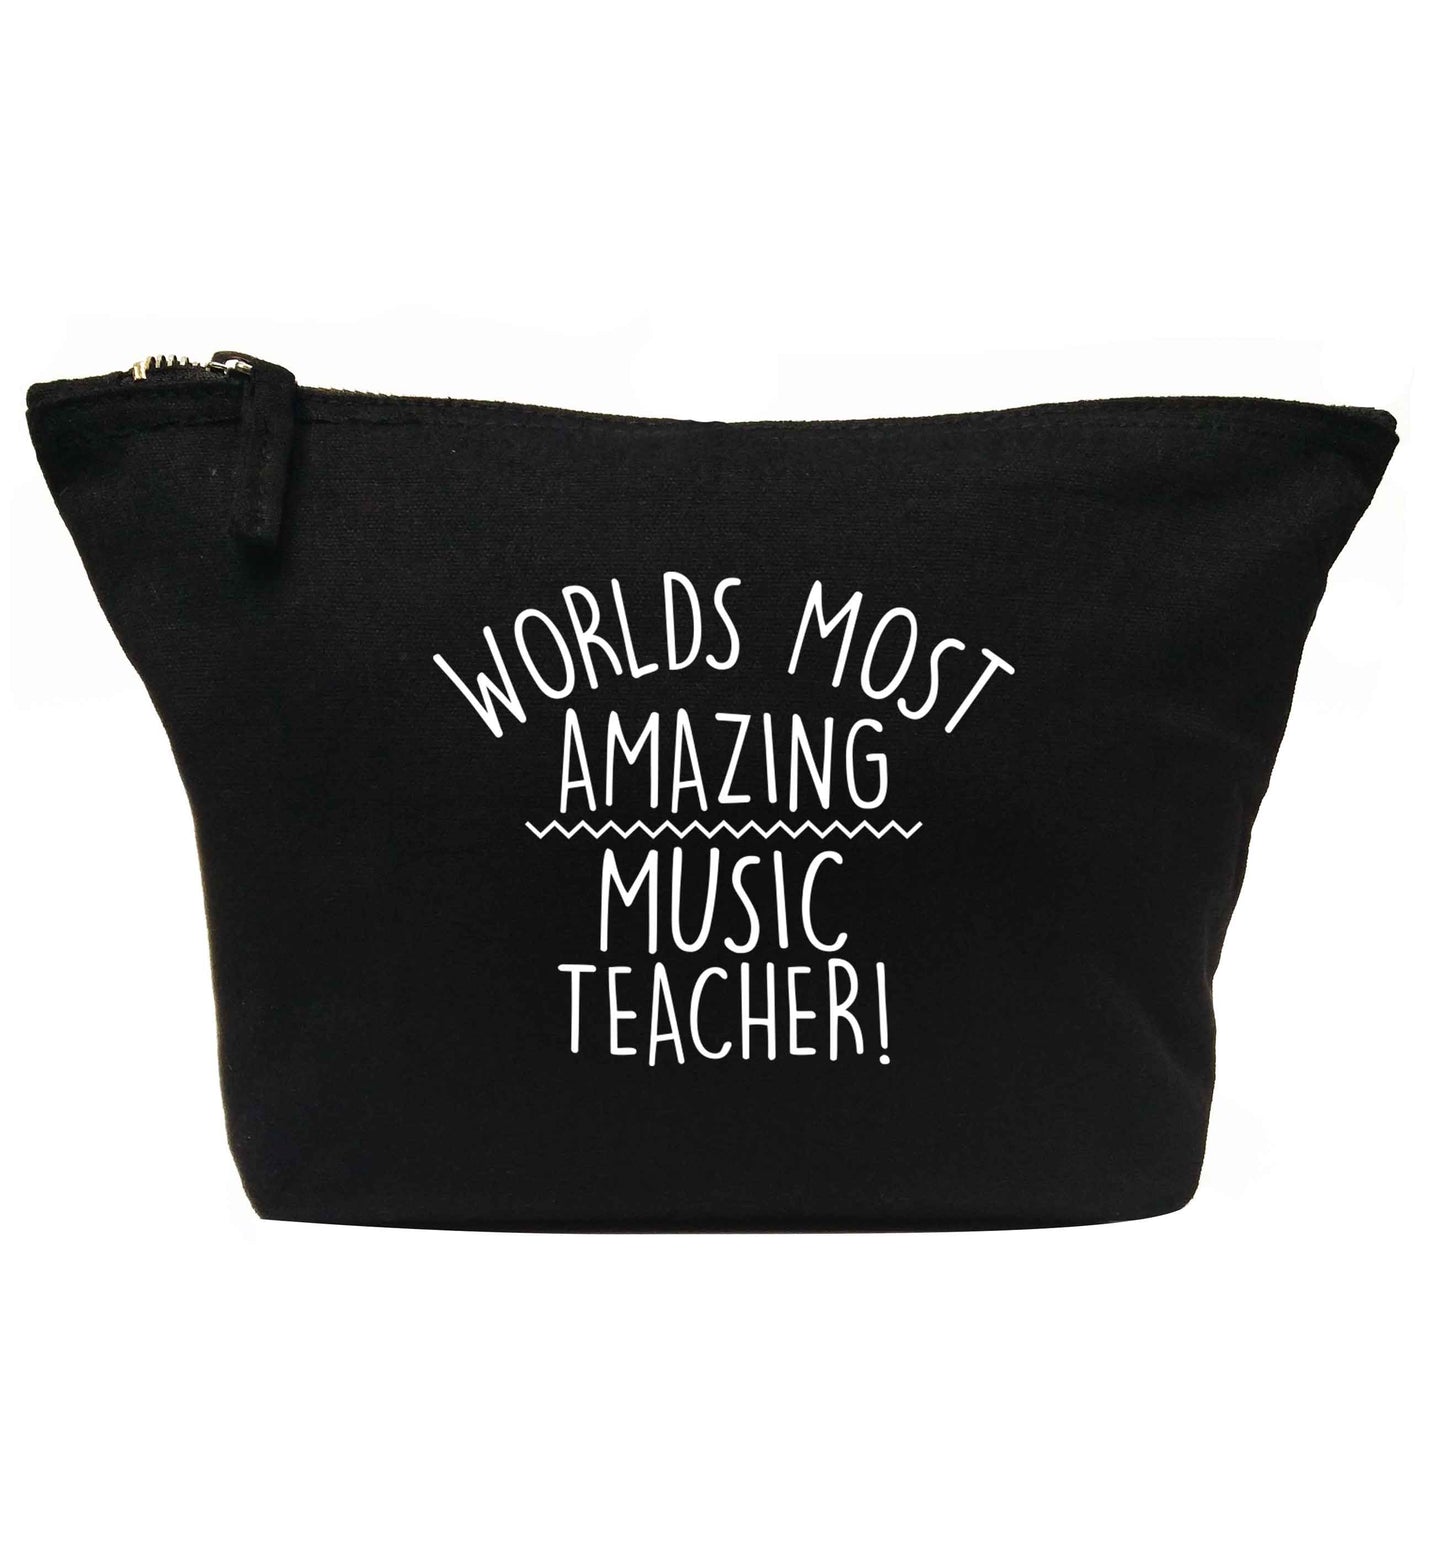 Worlds most amazing music teacher | Makeup / wash bag